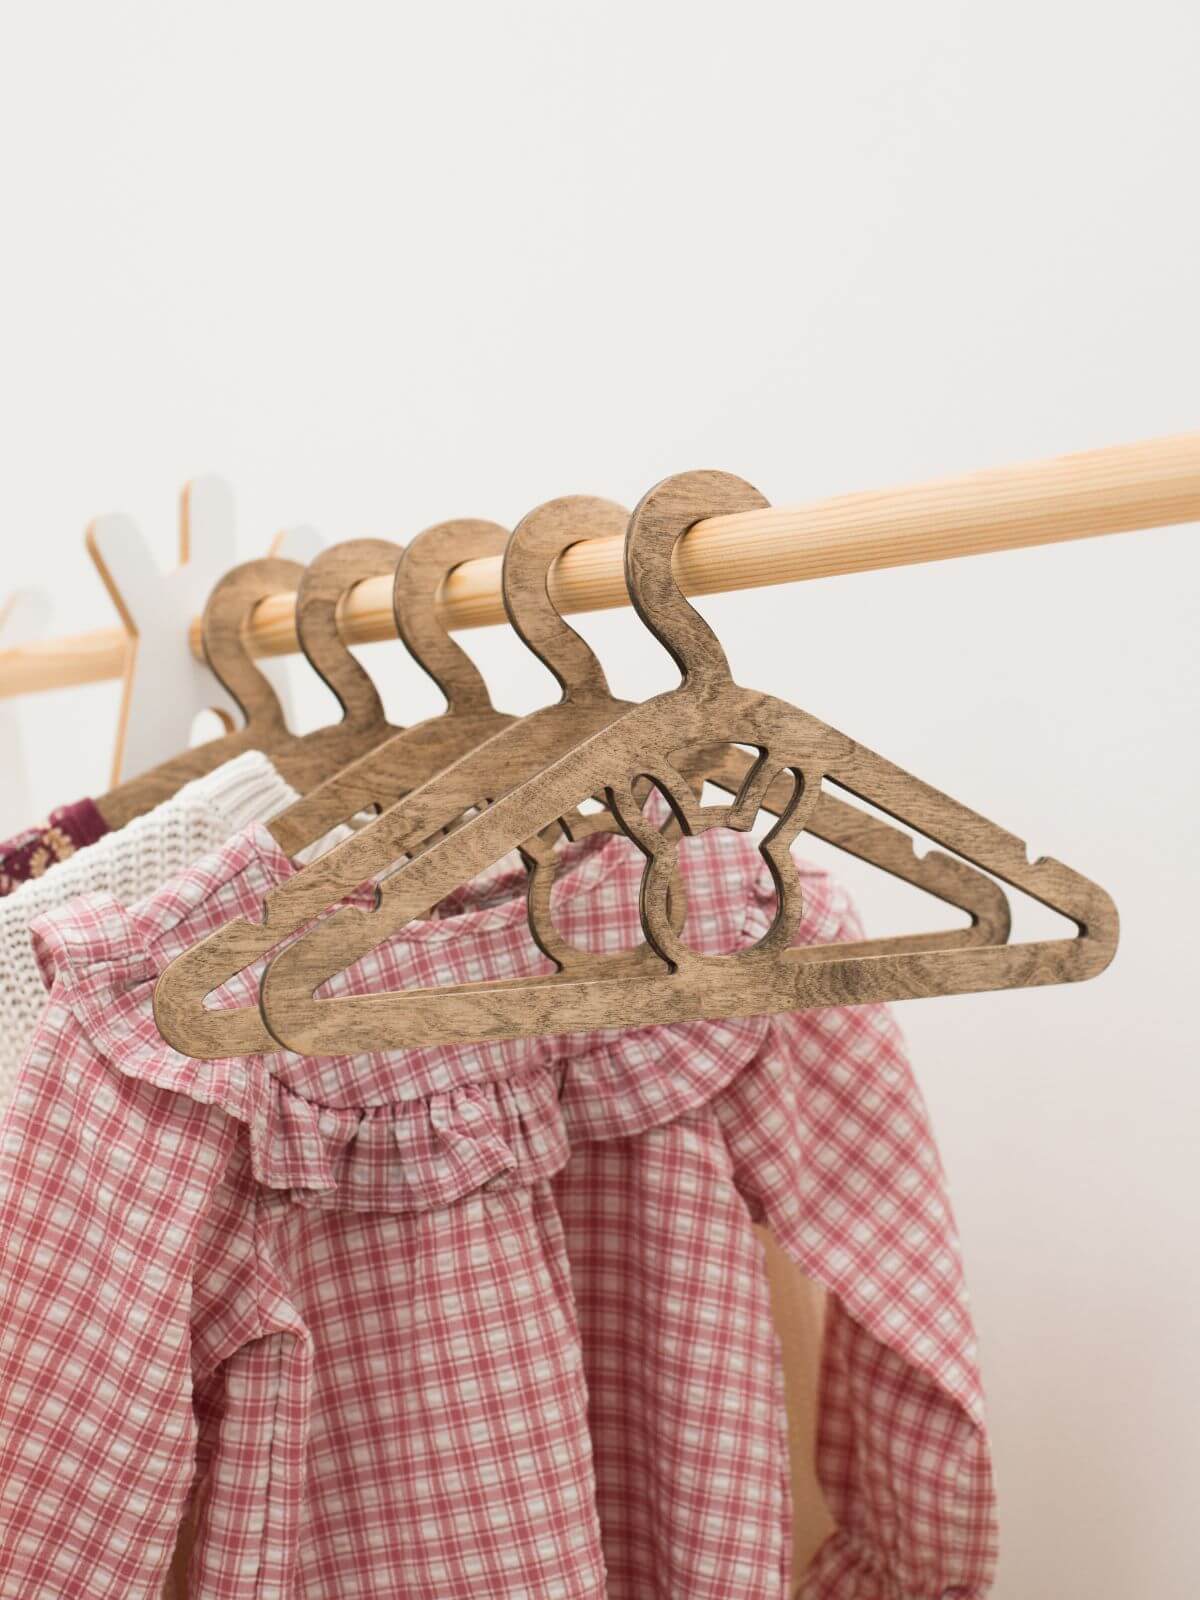  clothes hangers